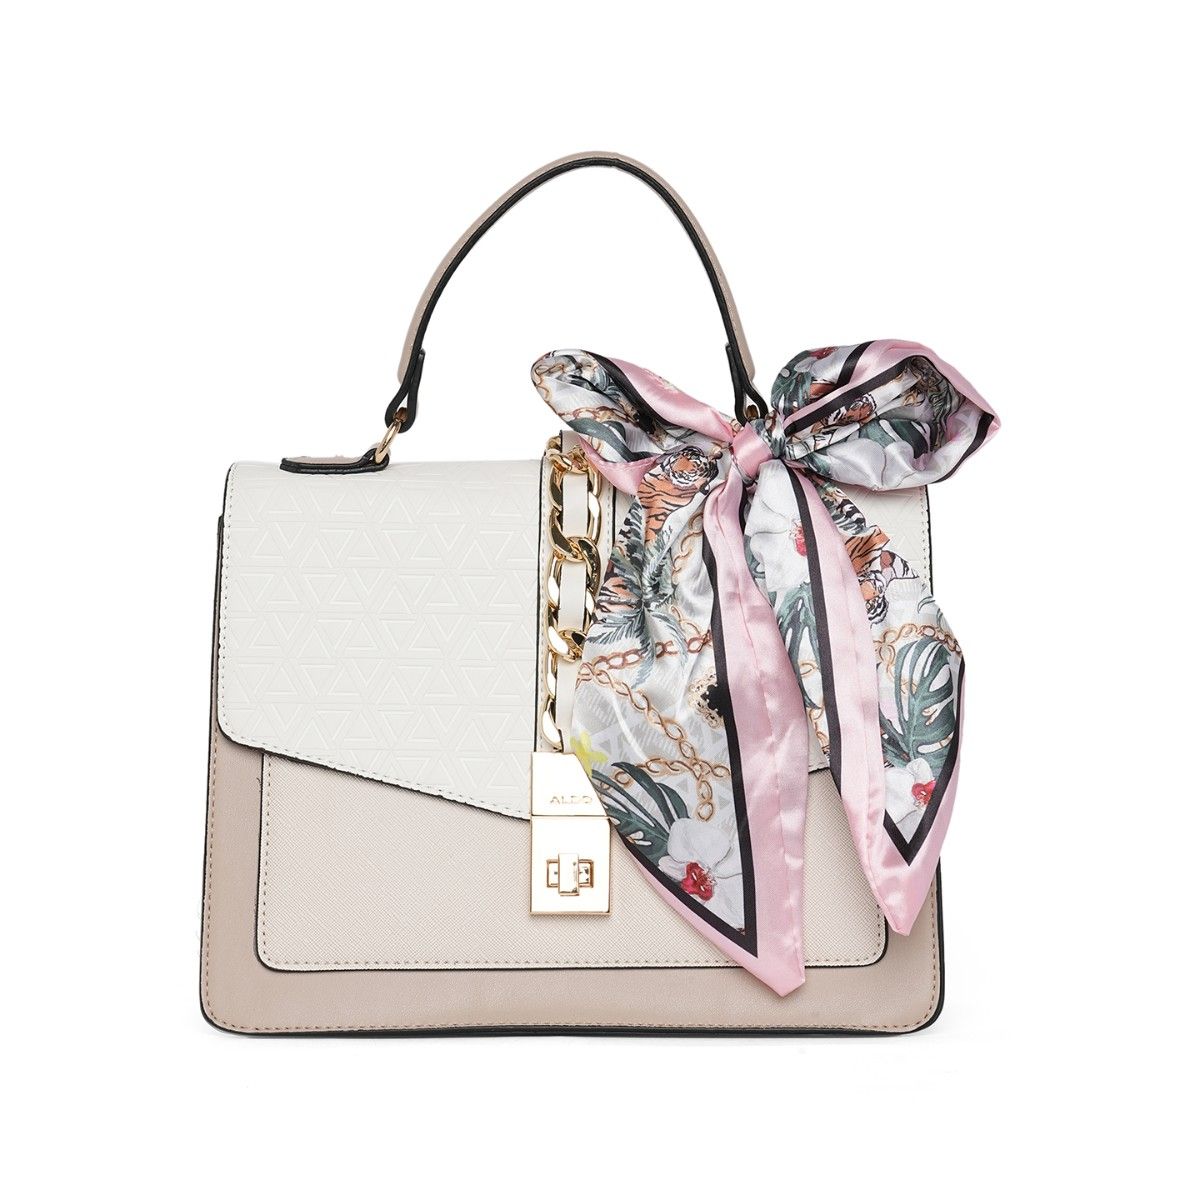 Aldo Glenda Satchel Women's Handbag - Pink | Women handbags, Handbag, Faux  leather